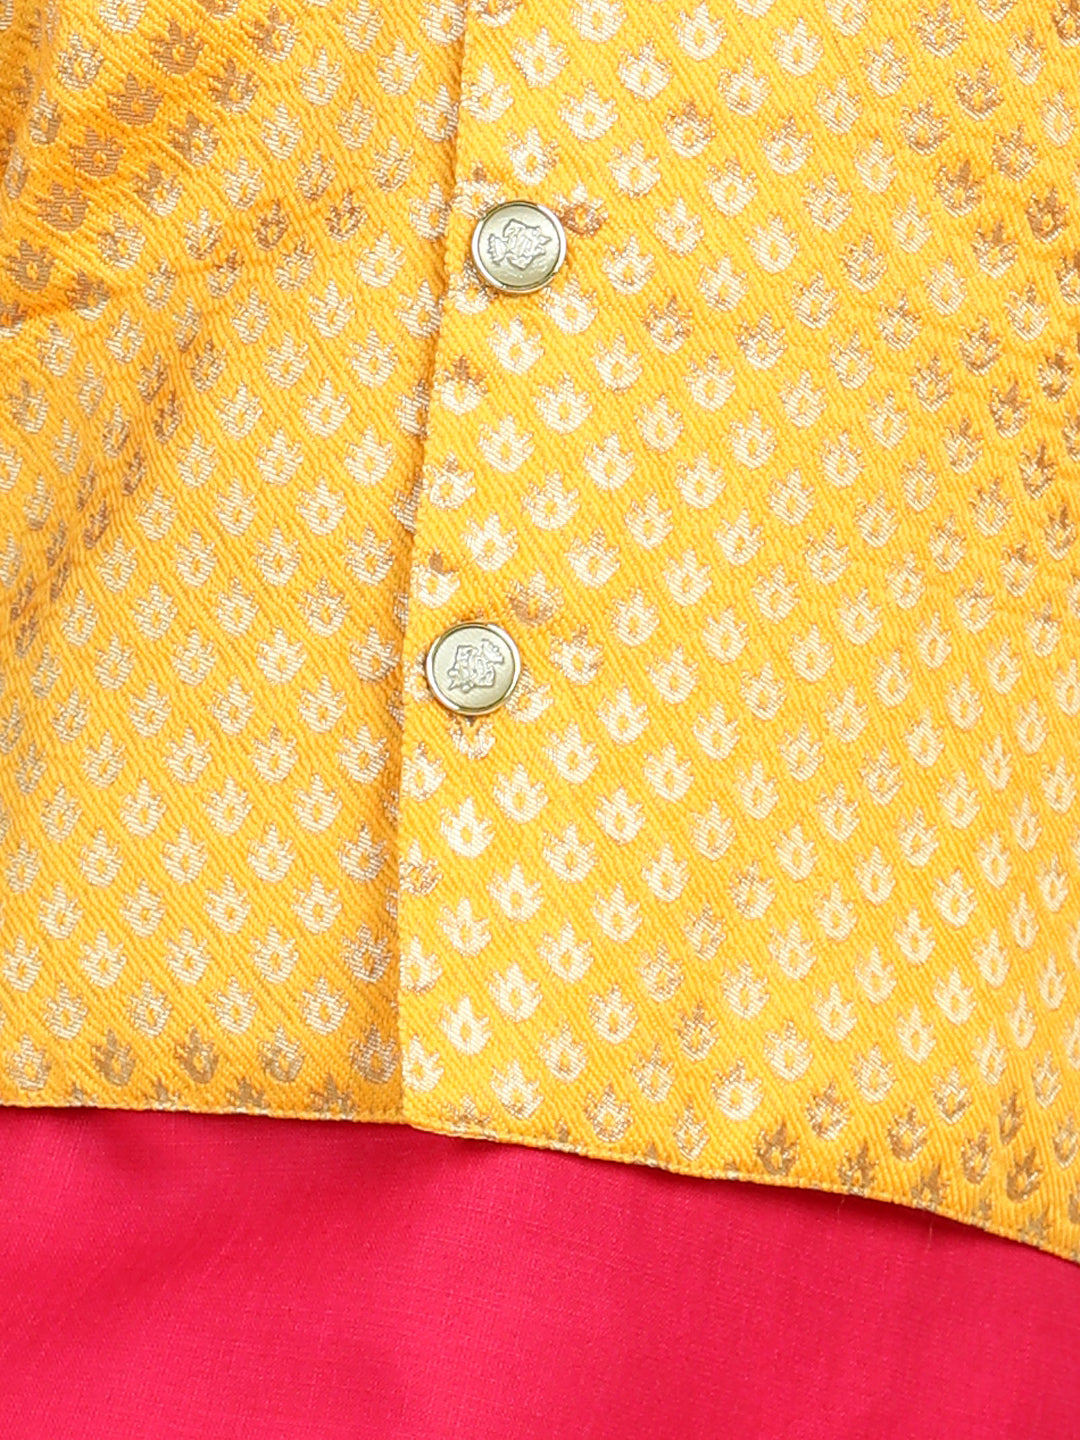 BownBee Attached Jacquard Jacket Kurta Pajama for Boys- Pink